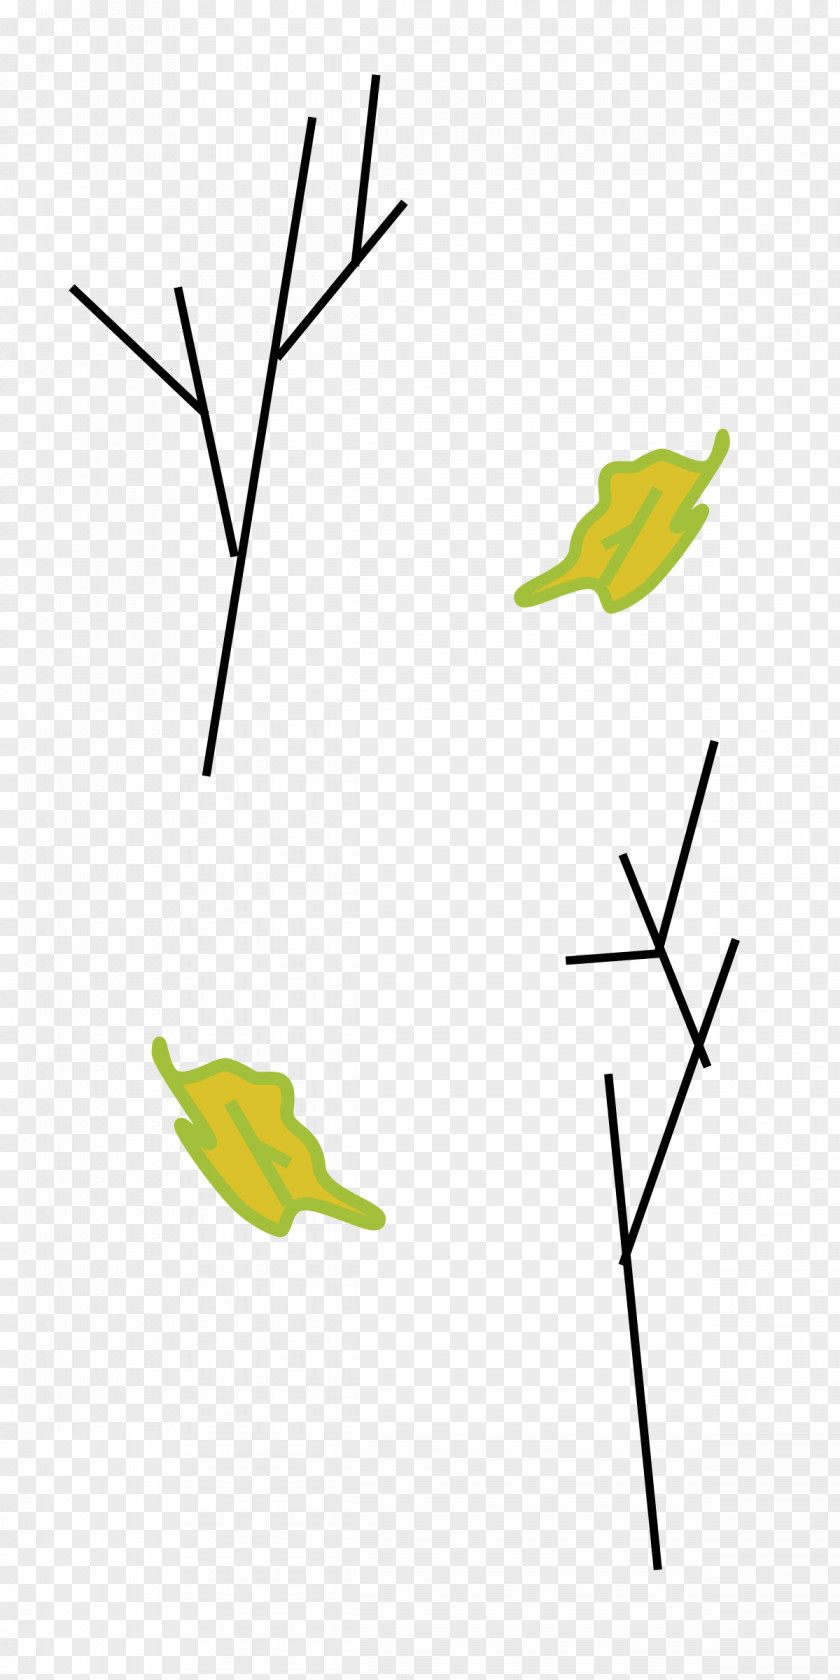 Number Of Branches Branch Leaf Plant Stem Clip Art PNG